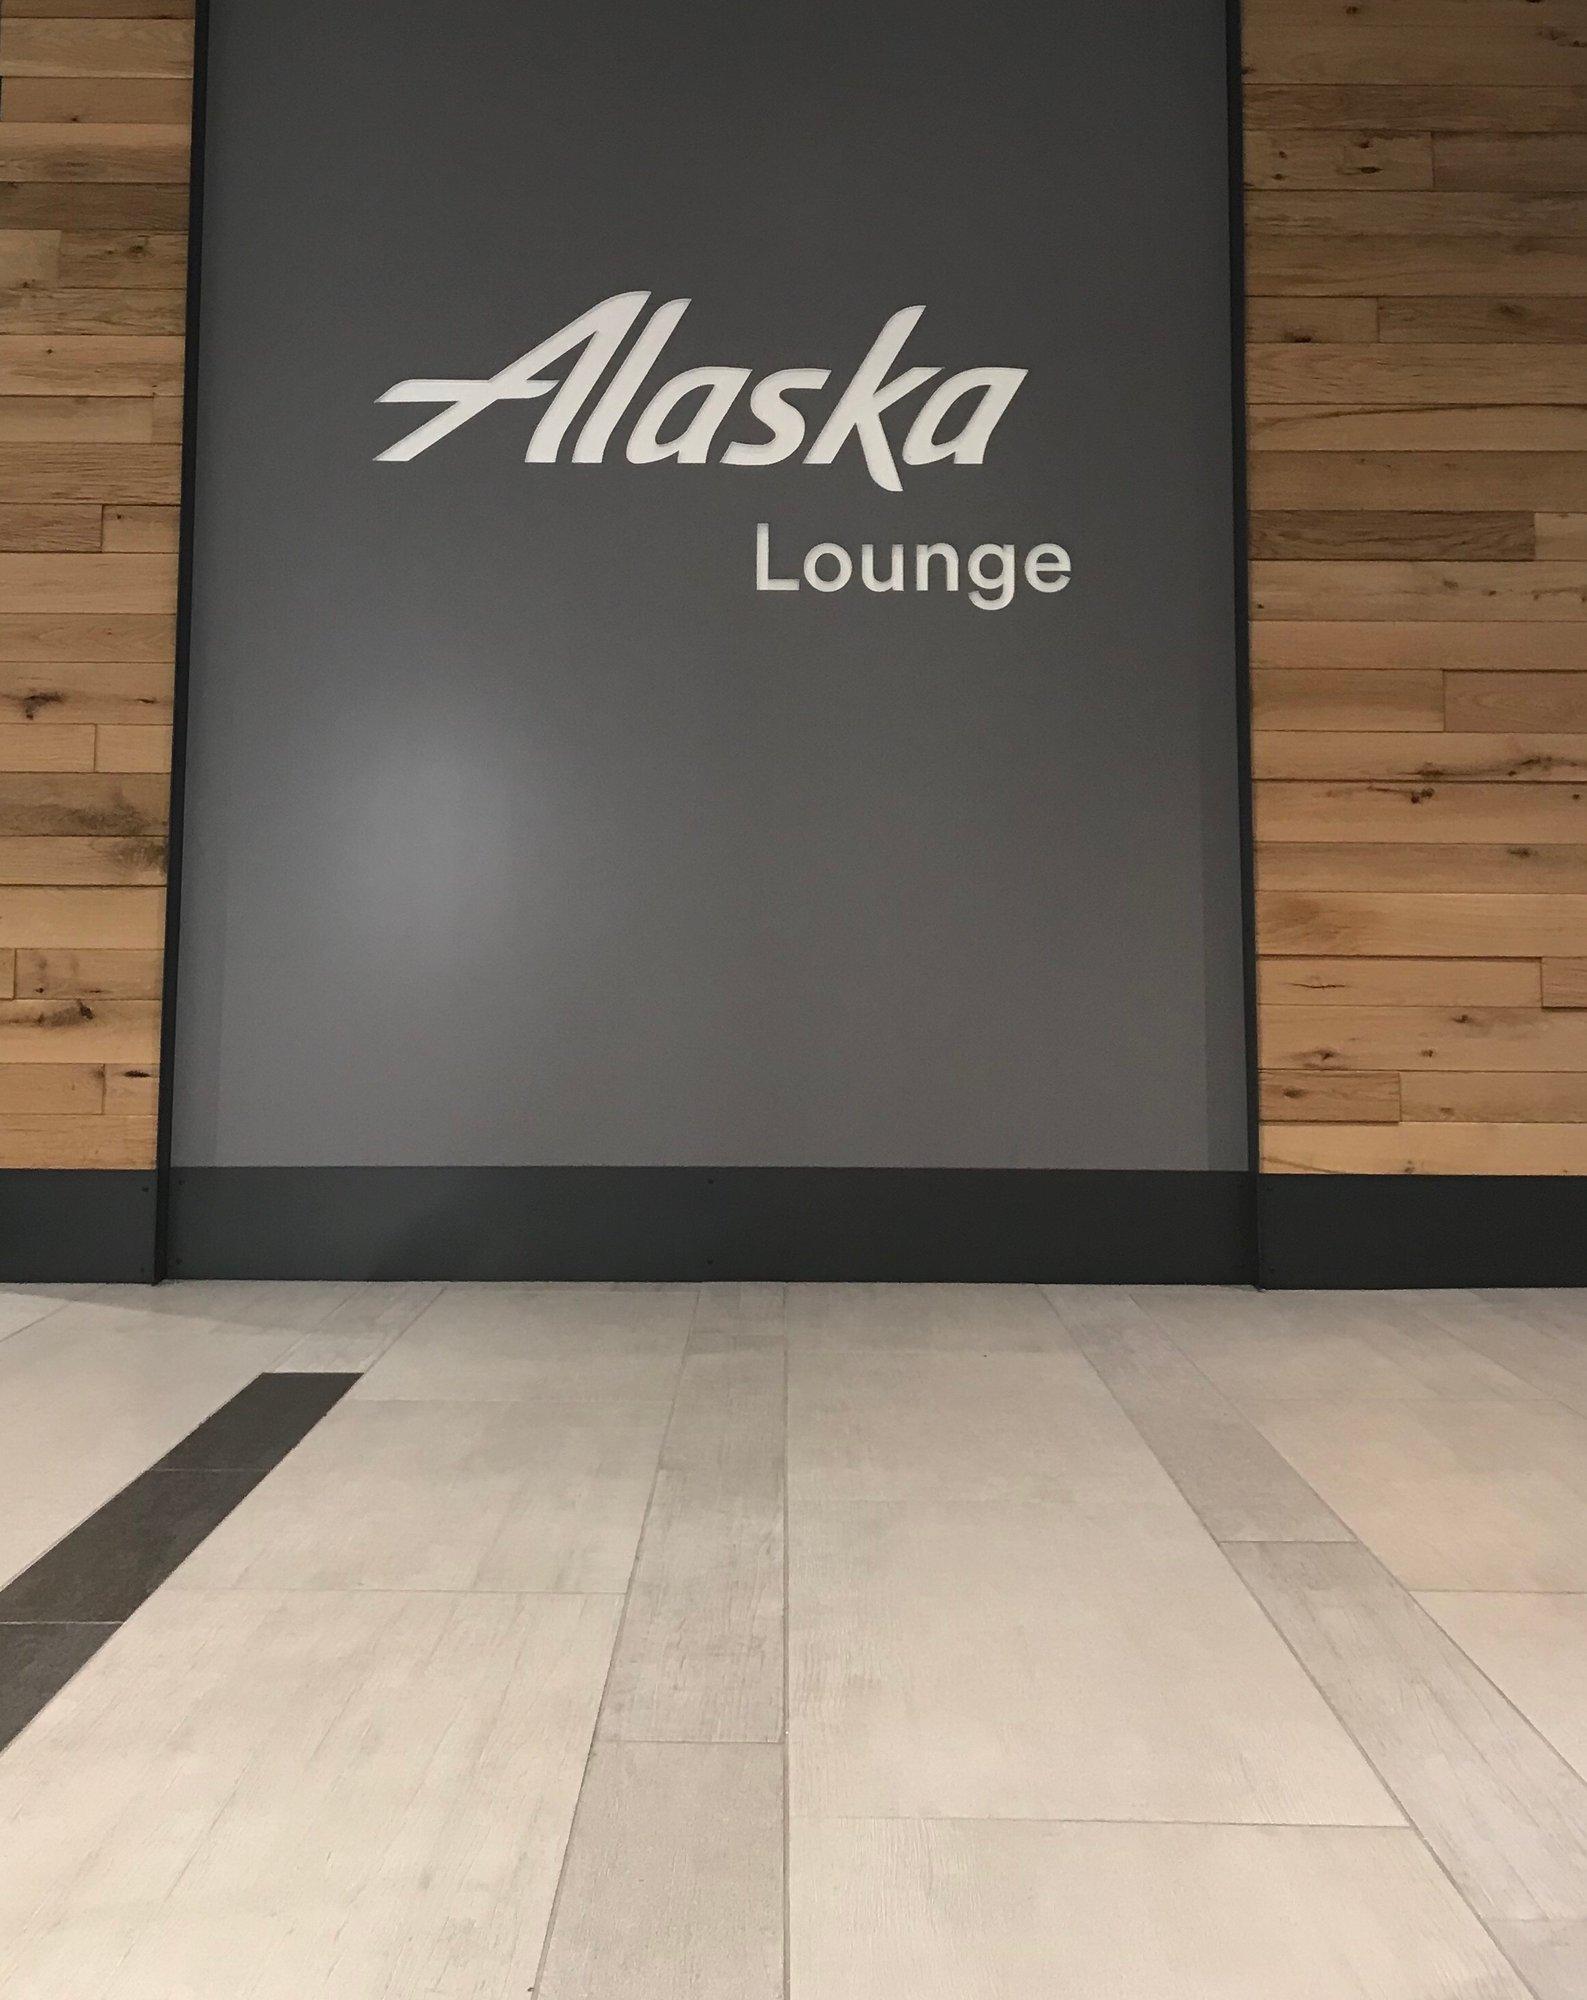 Alaska Airlines Alaska Lounge image 8 of 36